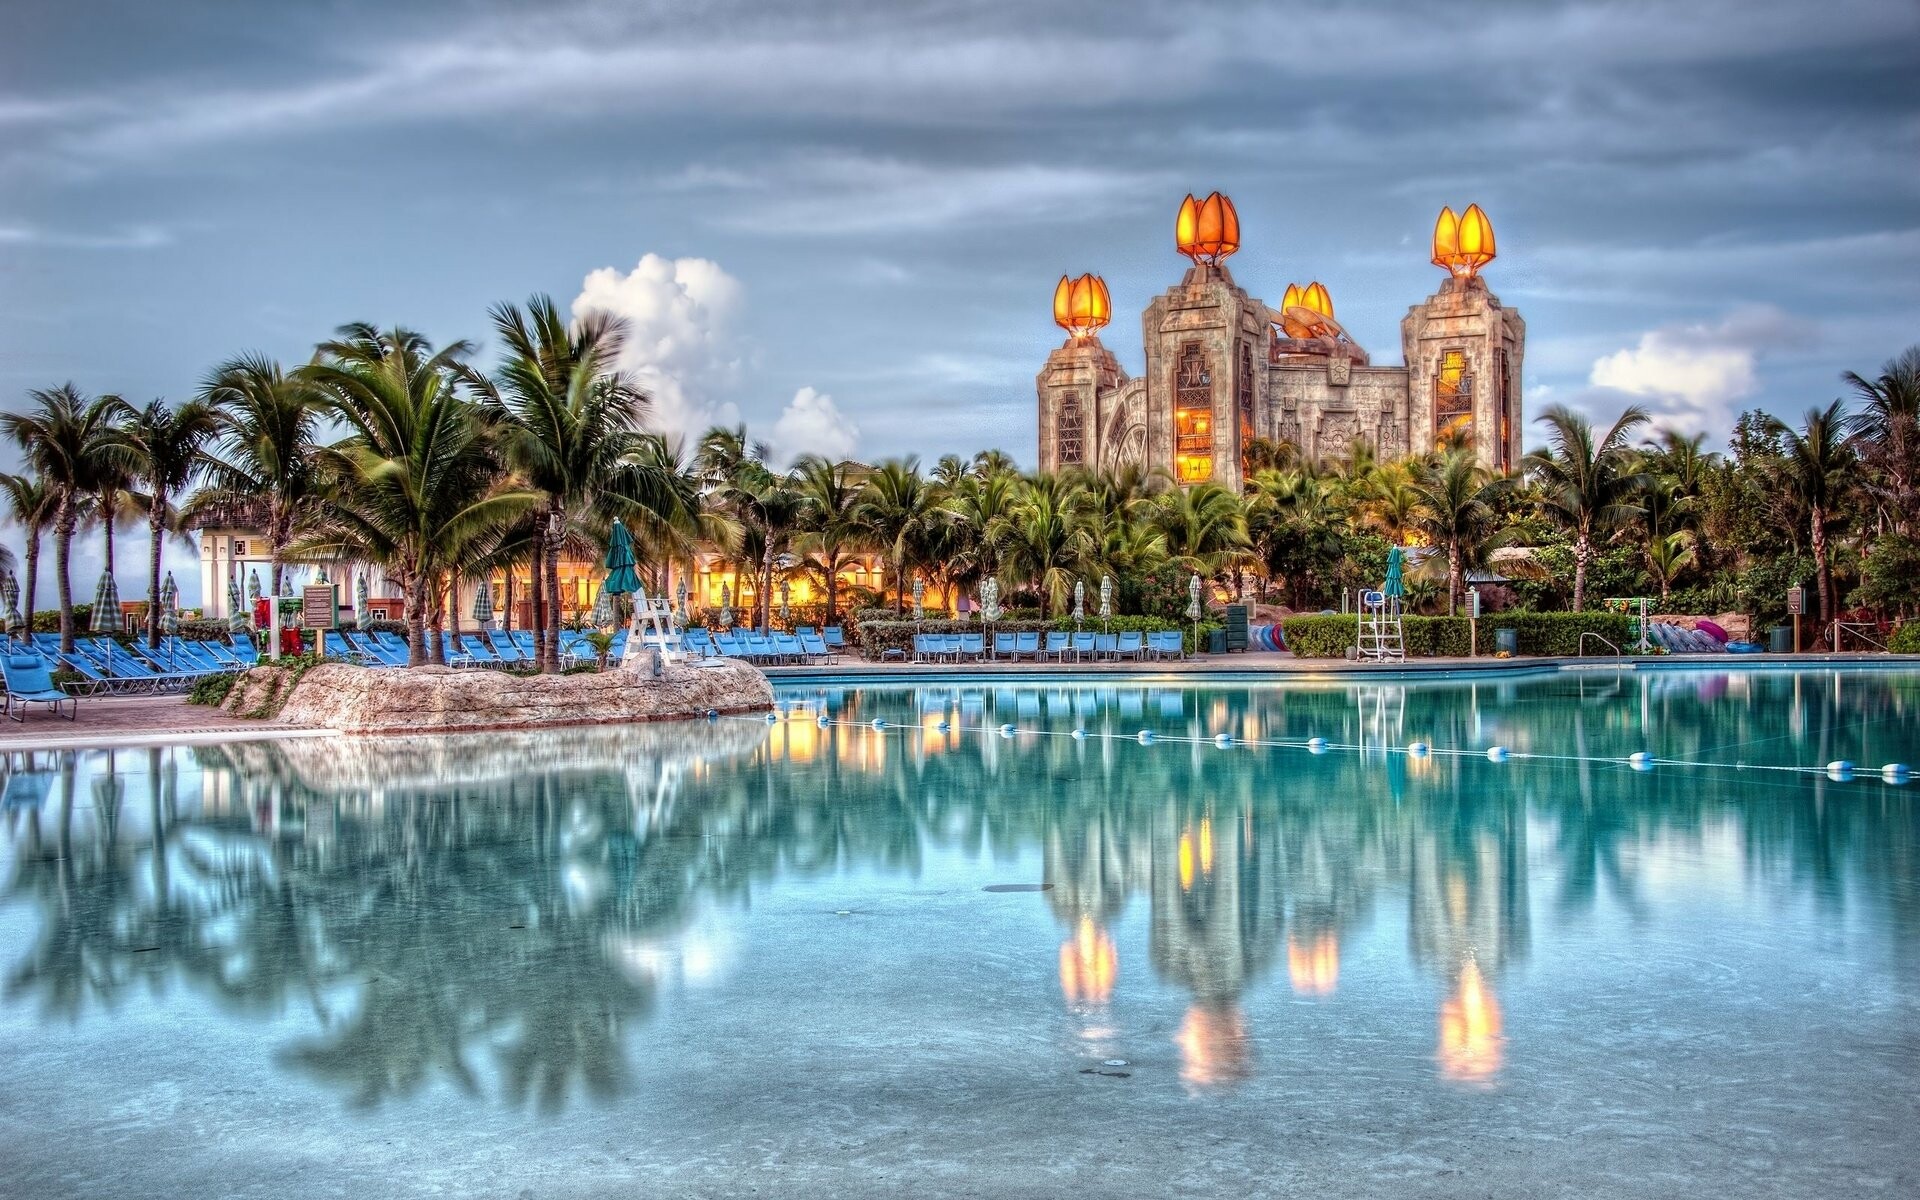 The Bahamas: Atlantis Resort, A lush, oceanside resort located on Paradise Island. 1920x1200 HD Wallpaper.